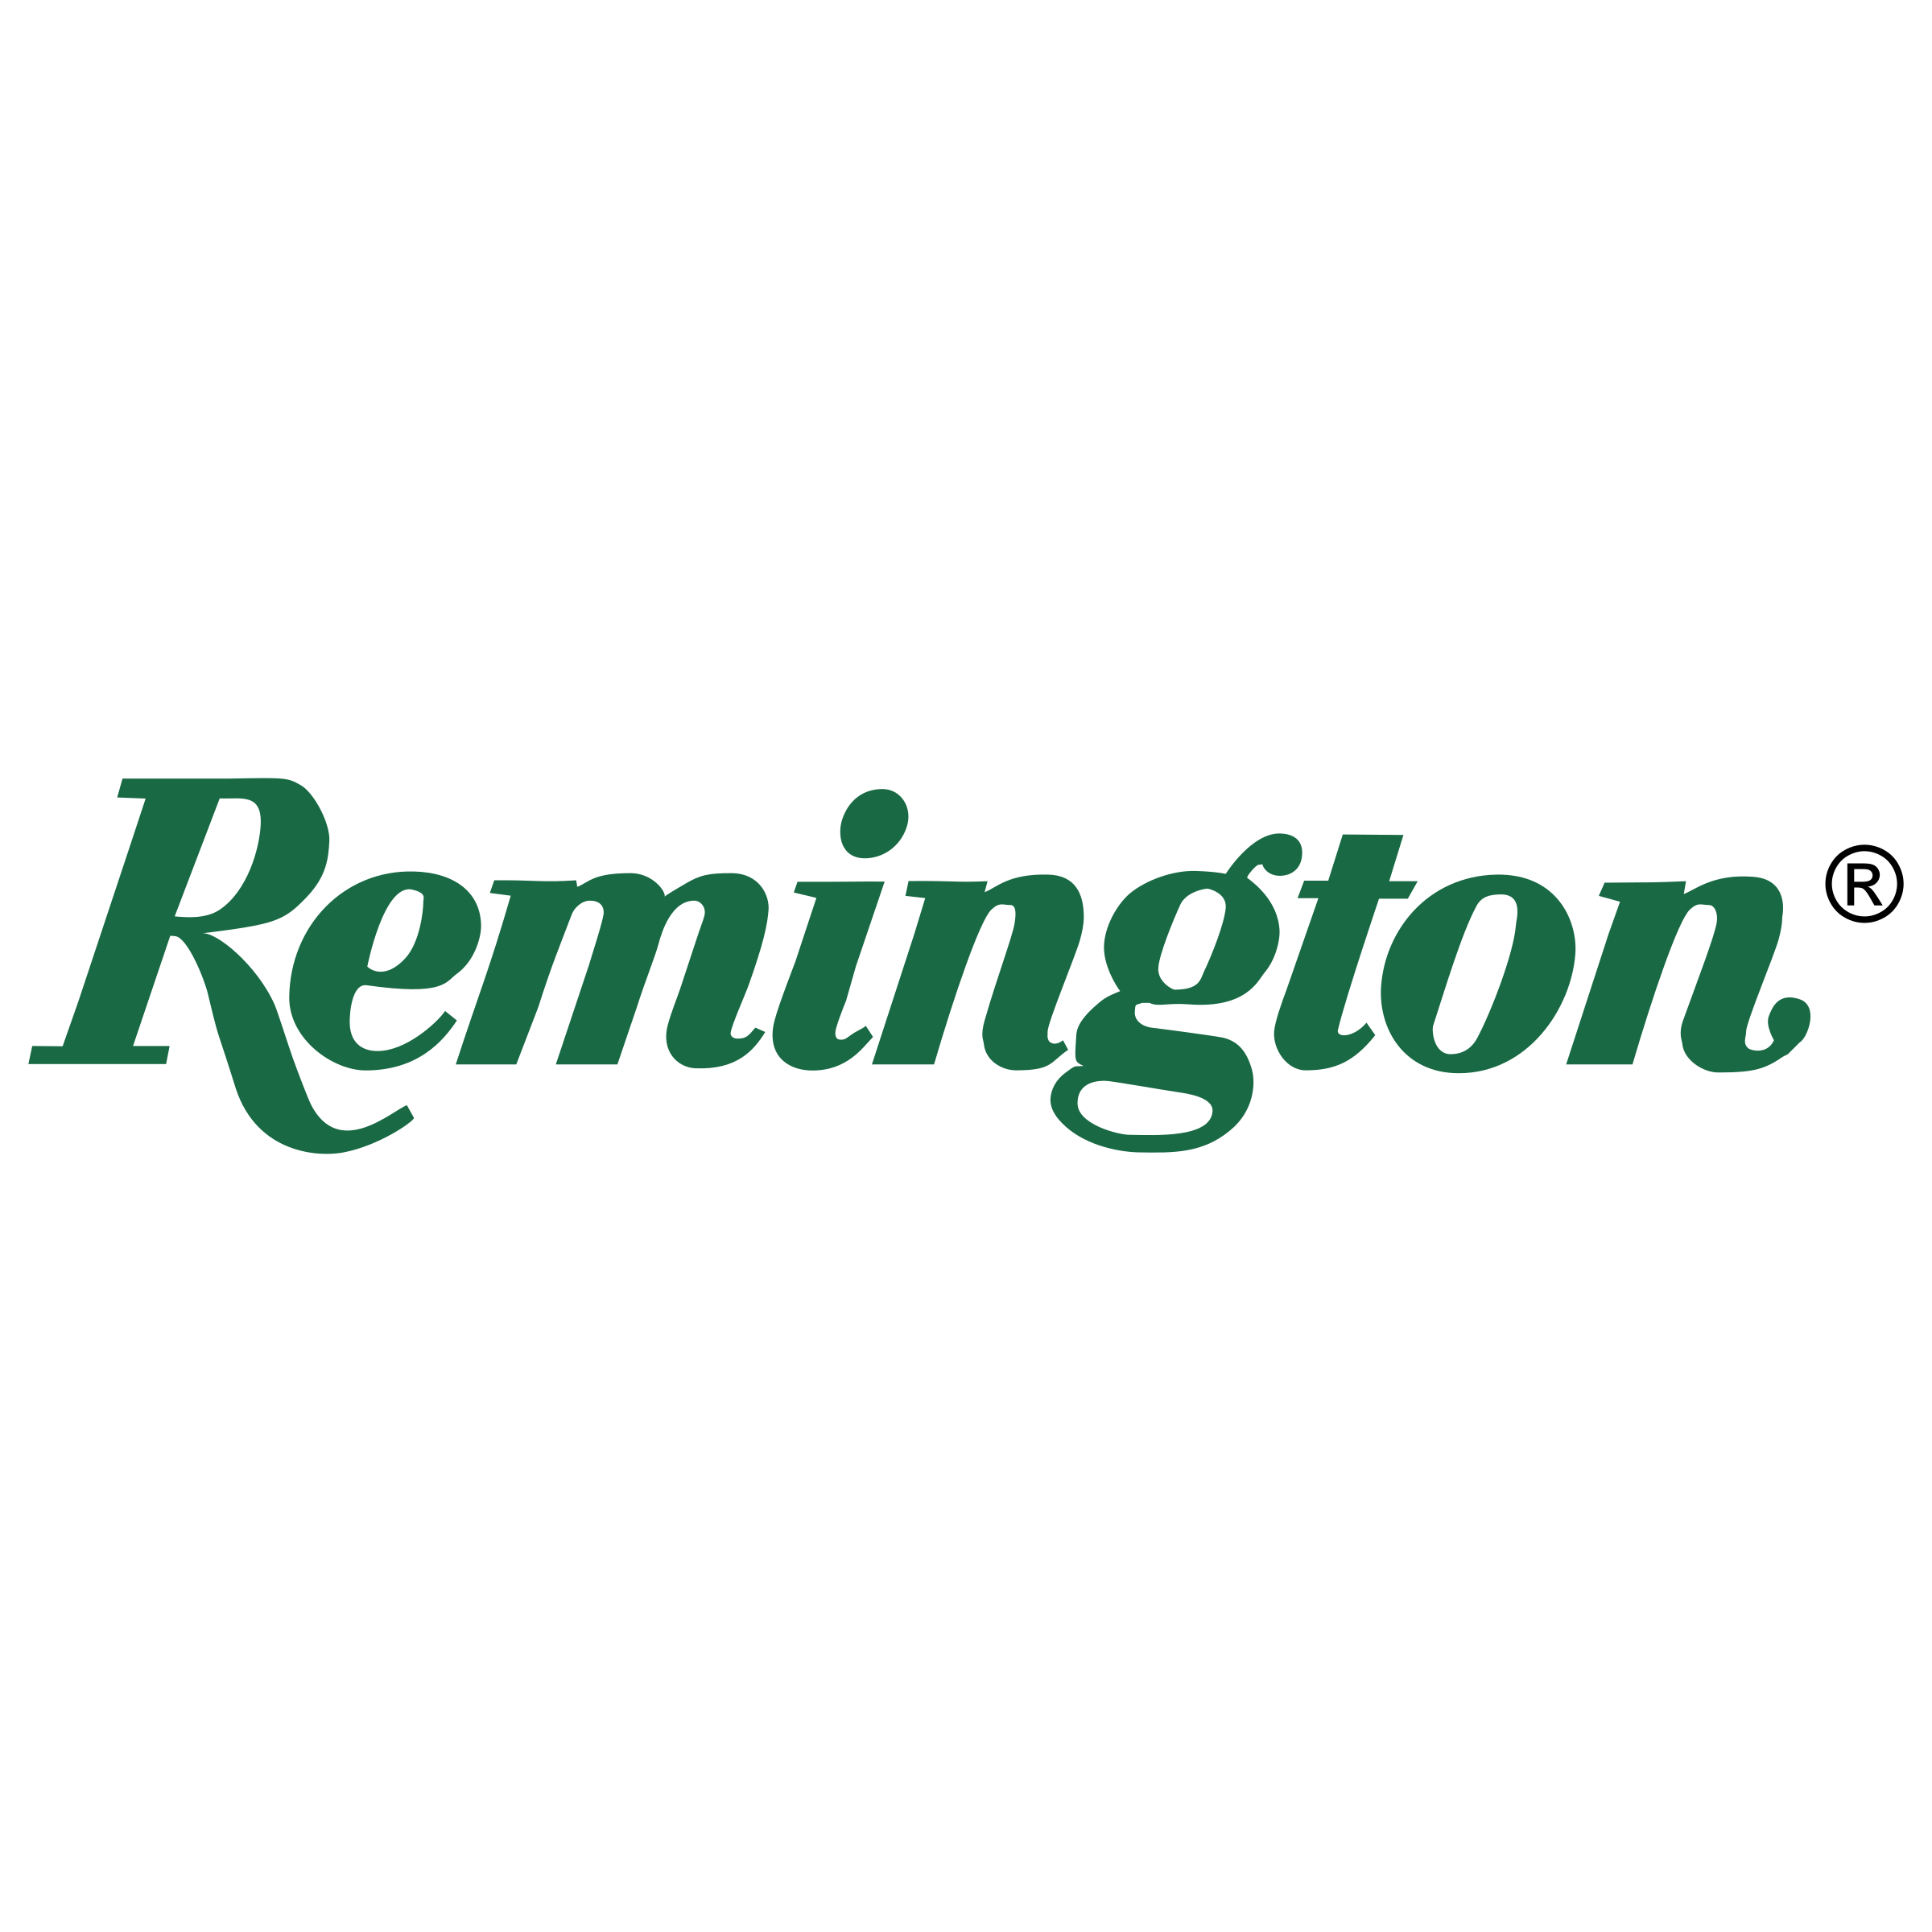 Remmington Logo - Icebox Armory